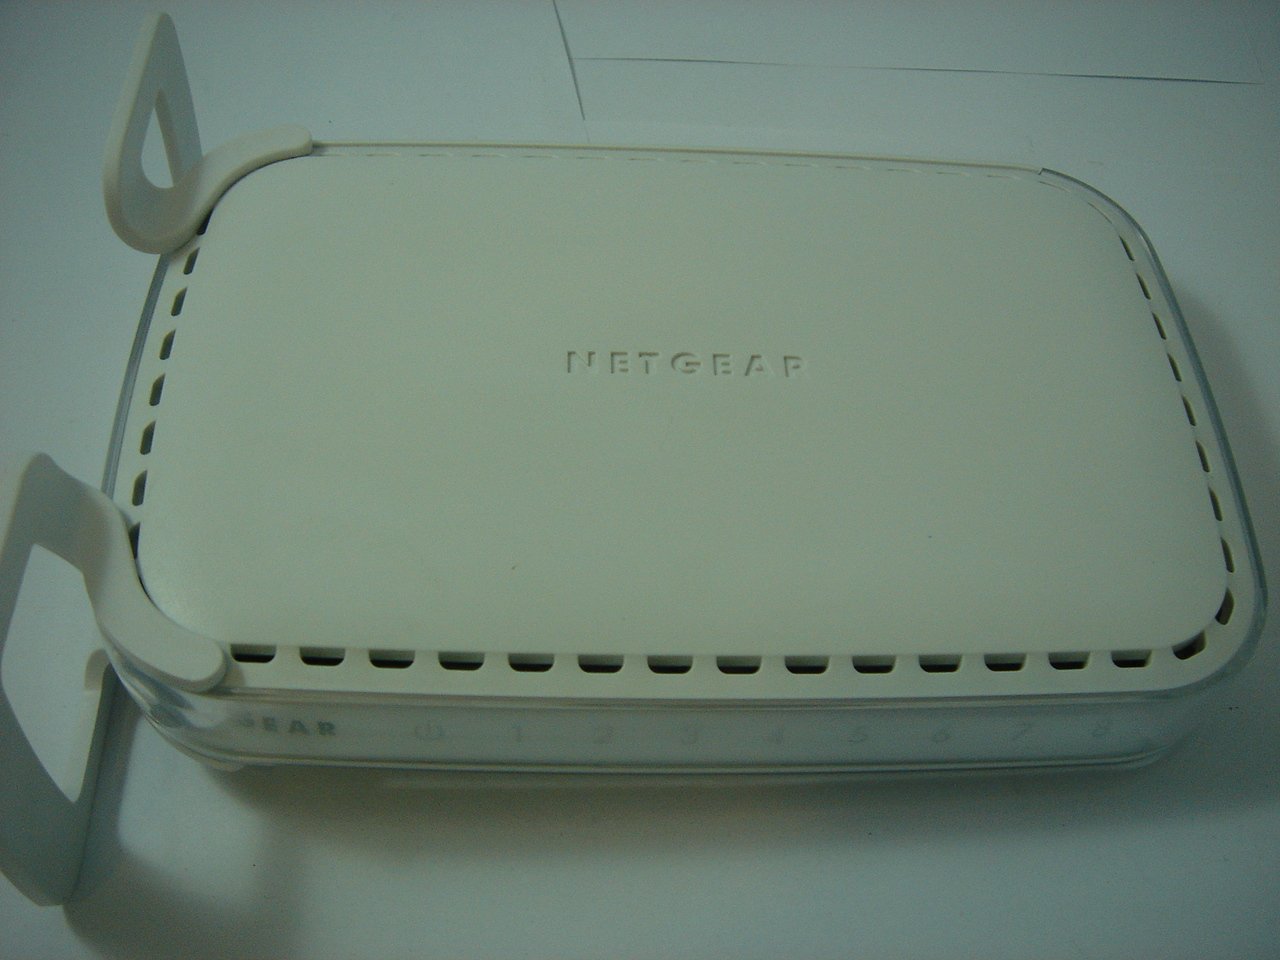 FS608 - Netgear 8-Port 10/100 Fast Ethernet Switch No PS - ASIS